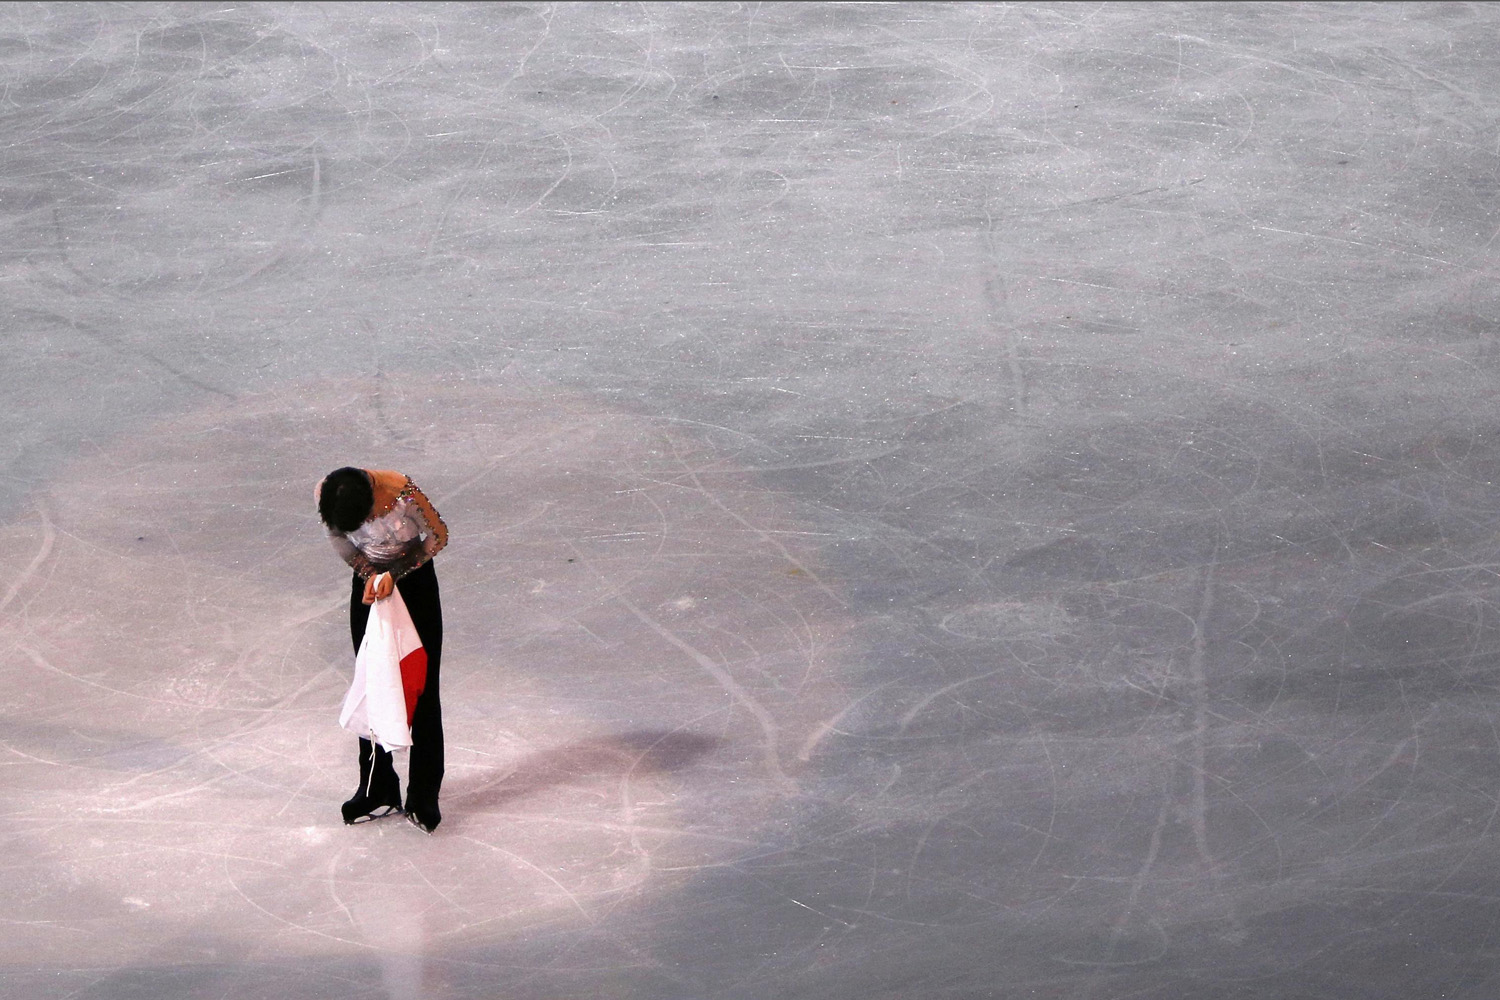 Yuzuru Hanyu bows after men's free skating program at the Sochi 2014 Winter Olympics